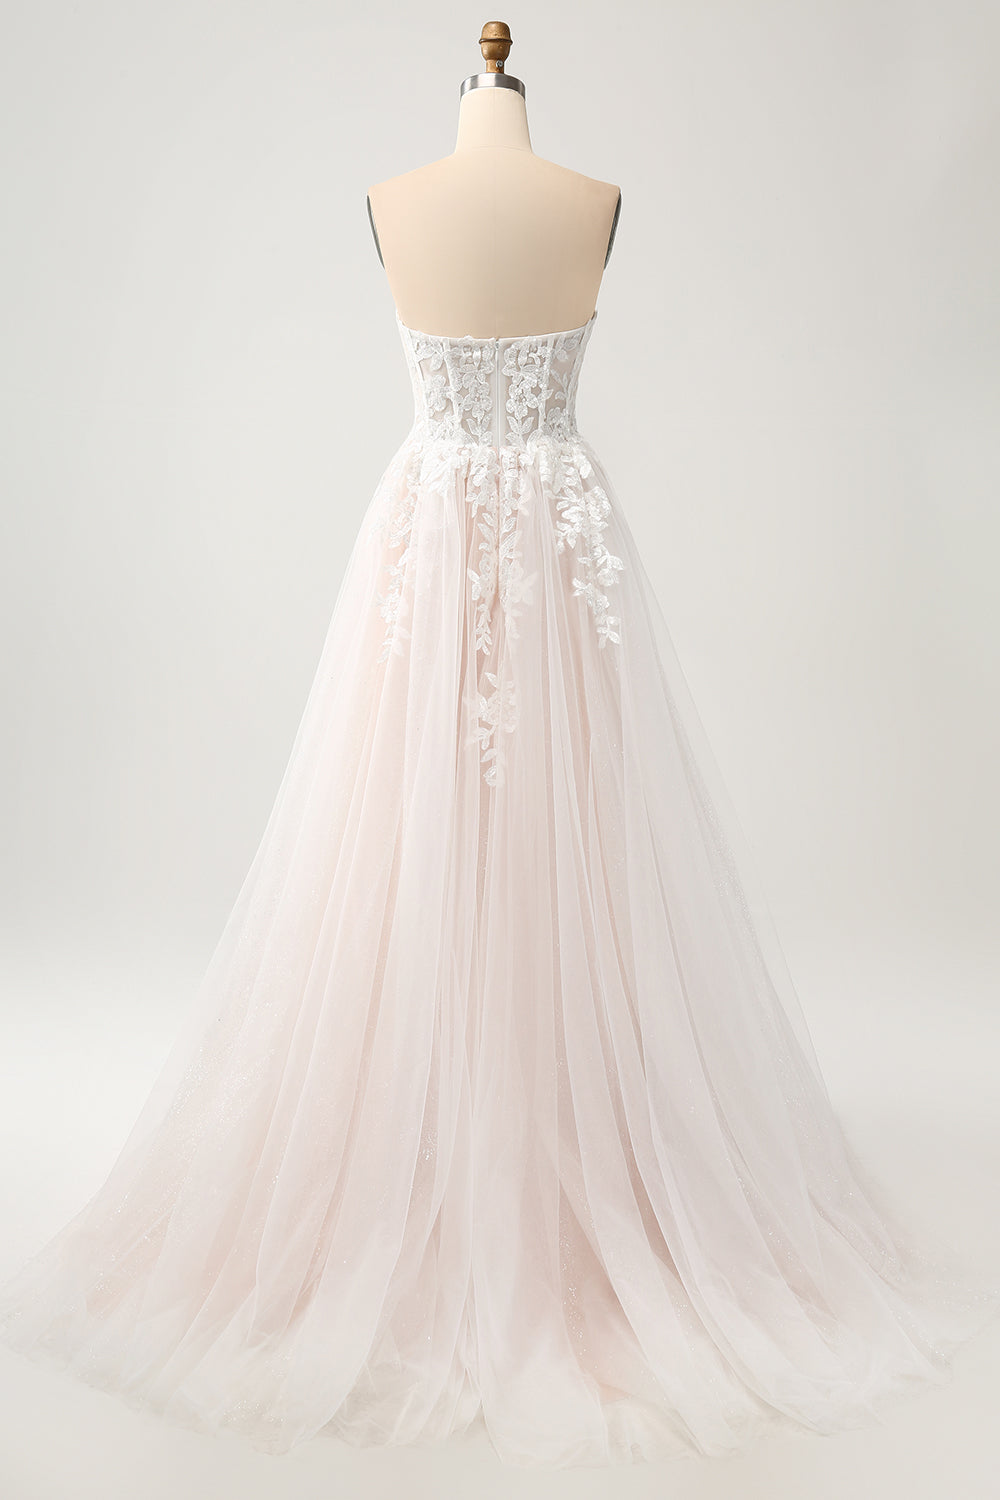 Sweetheart Detachable Spaghetti Straps Applique Sparkly A-Line Floor Length Bridal Dress